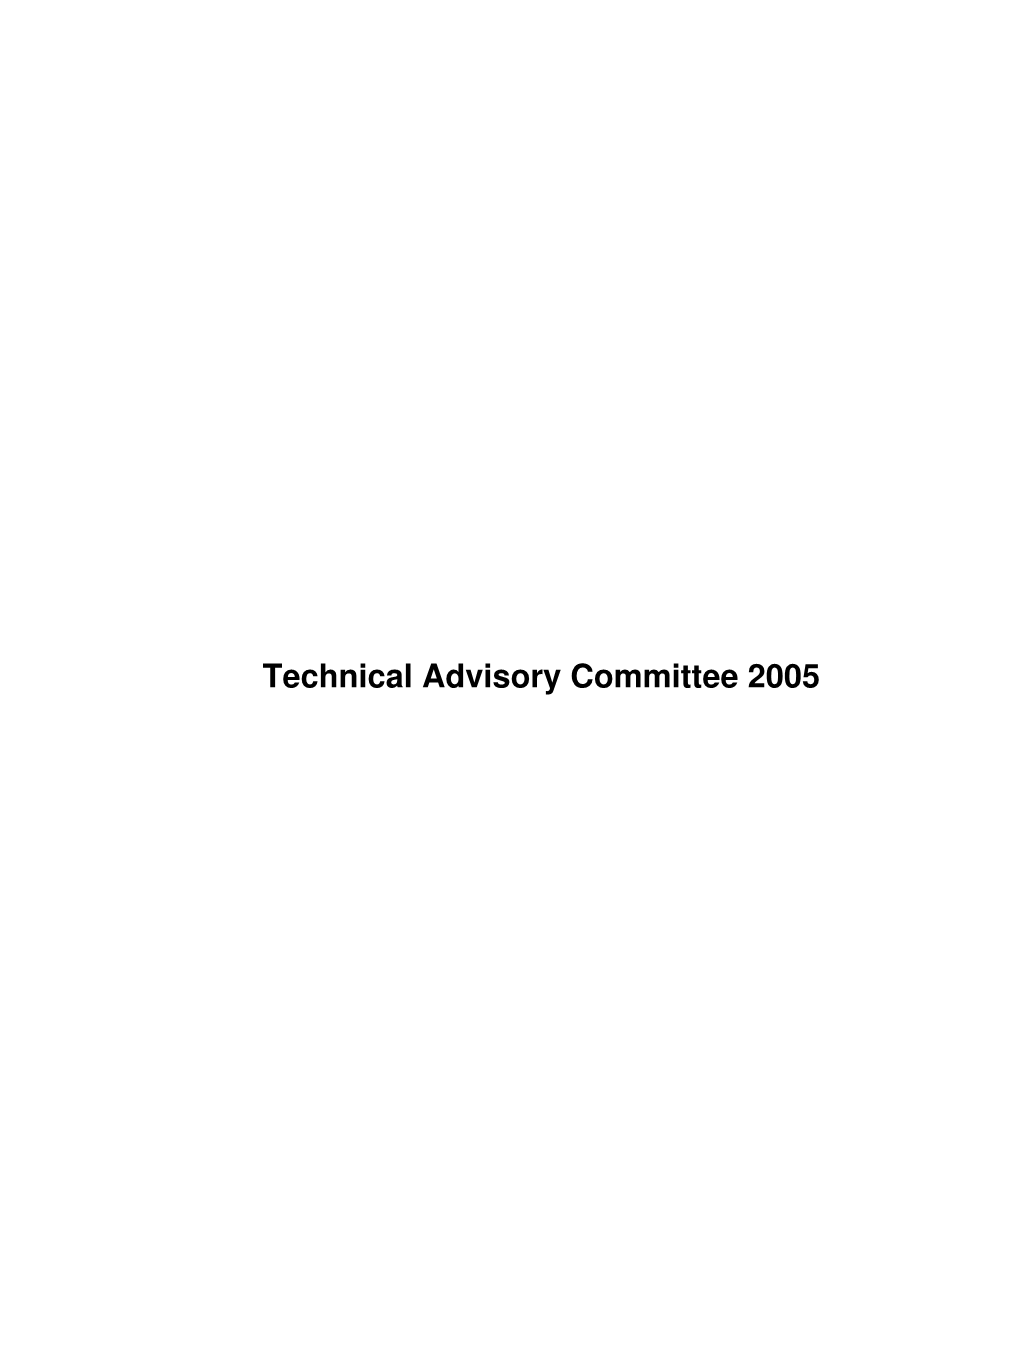 Technical Advisory Committee 2005 Technical Advisory Committee 2005